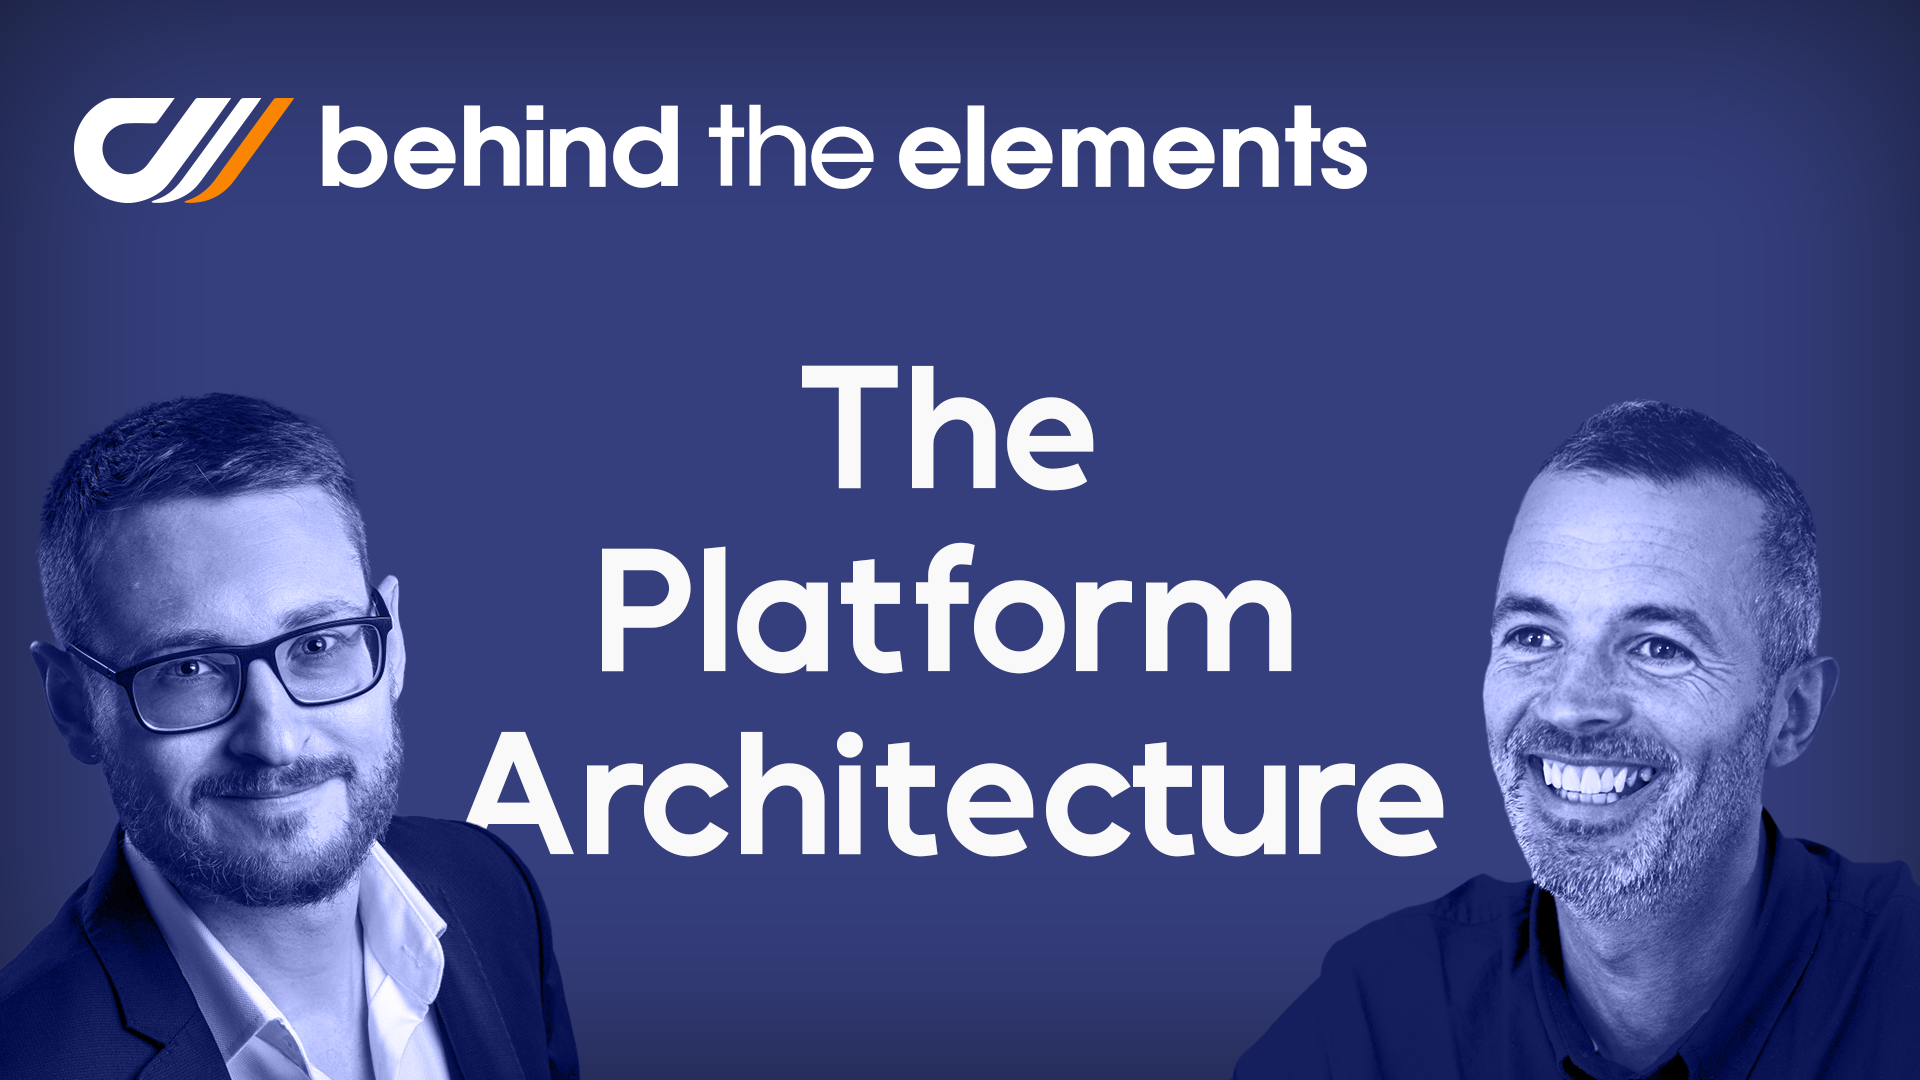 The platform Architecture